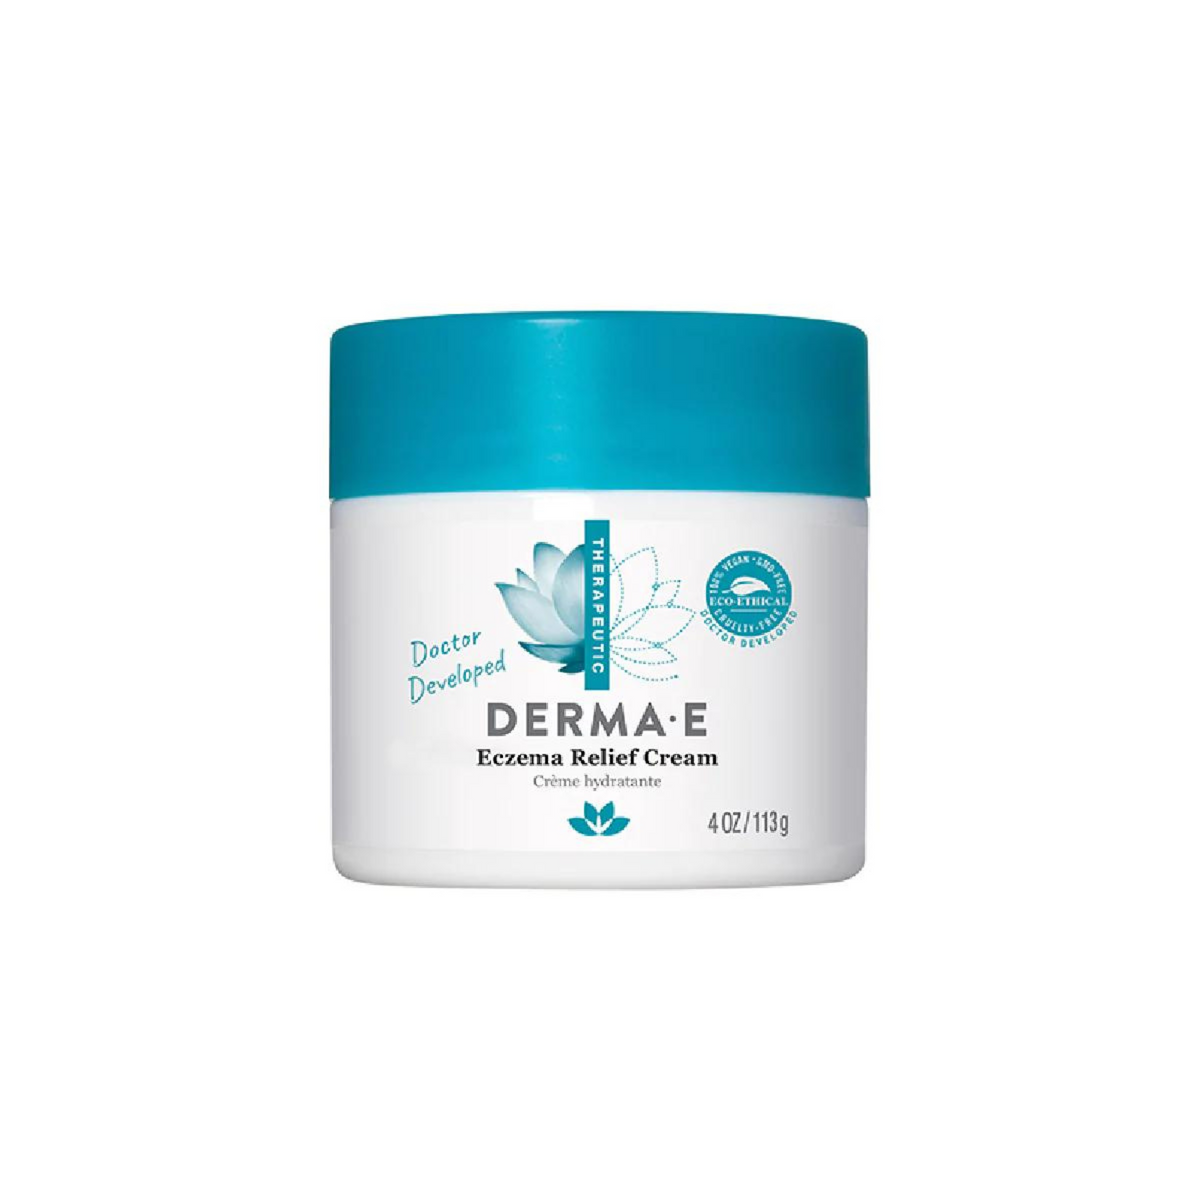 Primary Image of DERMA E Eczema Relief Cream (4 oz)